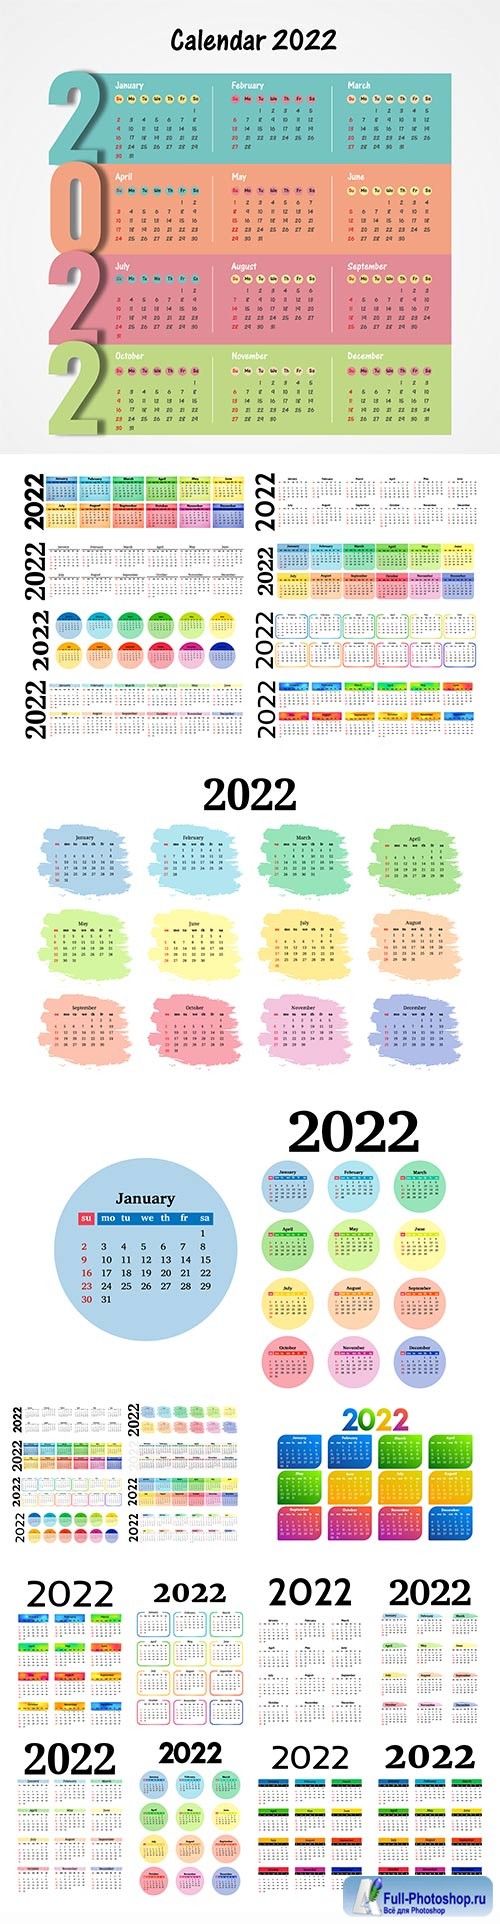 New year 2022 poster calendar design template vector